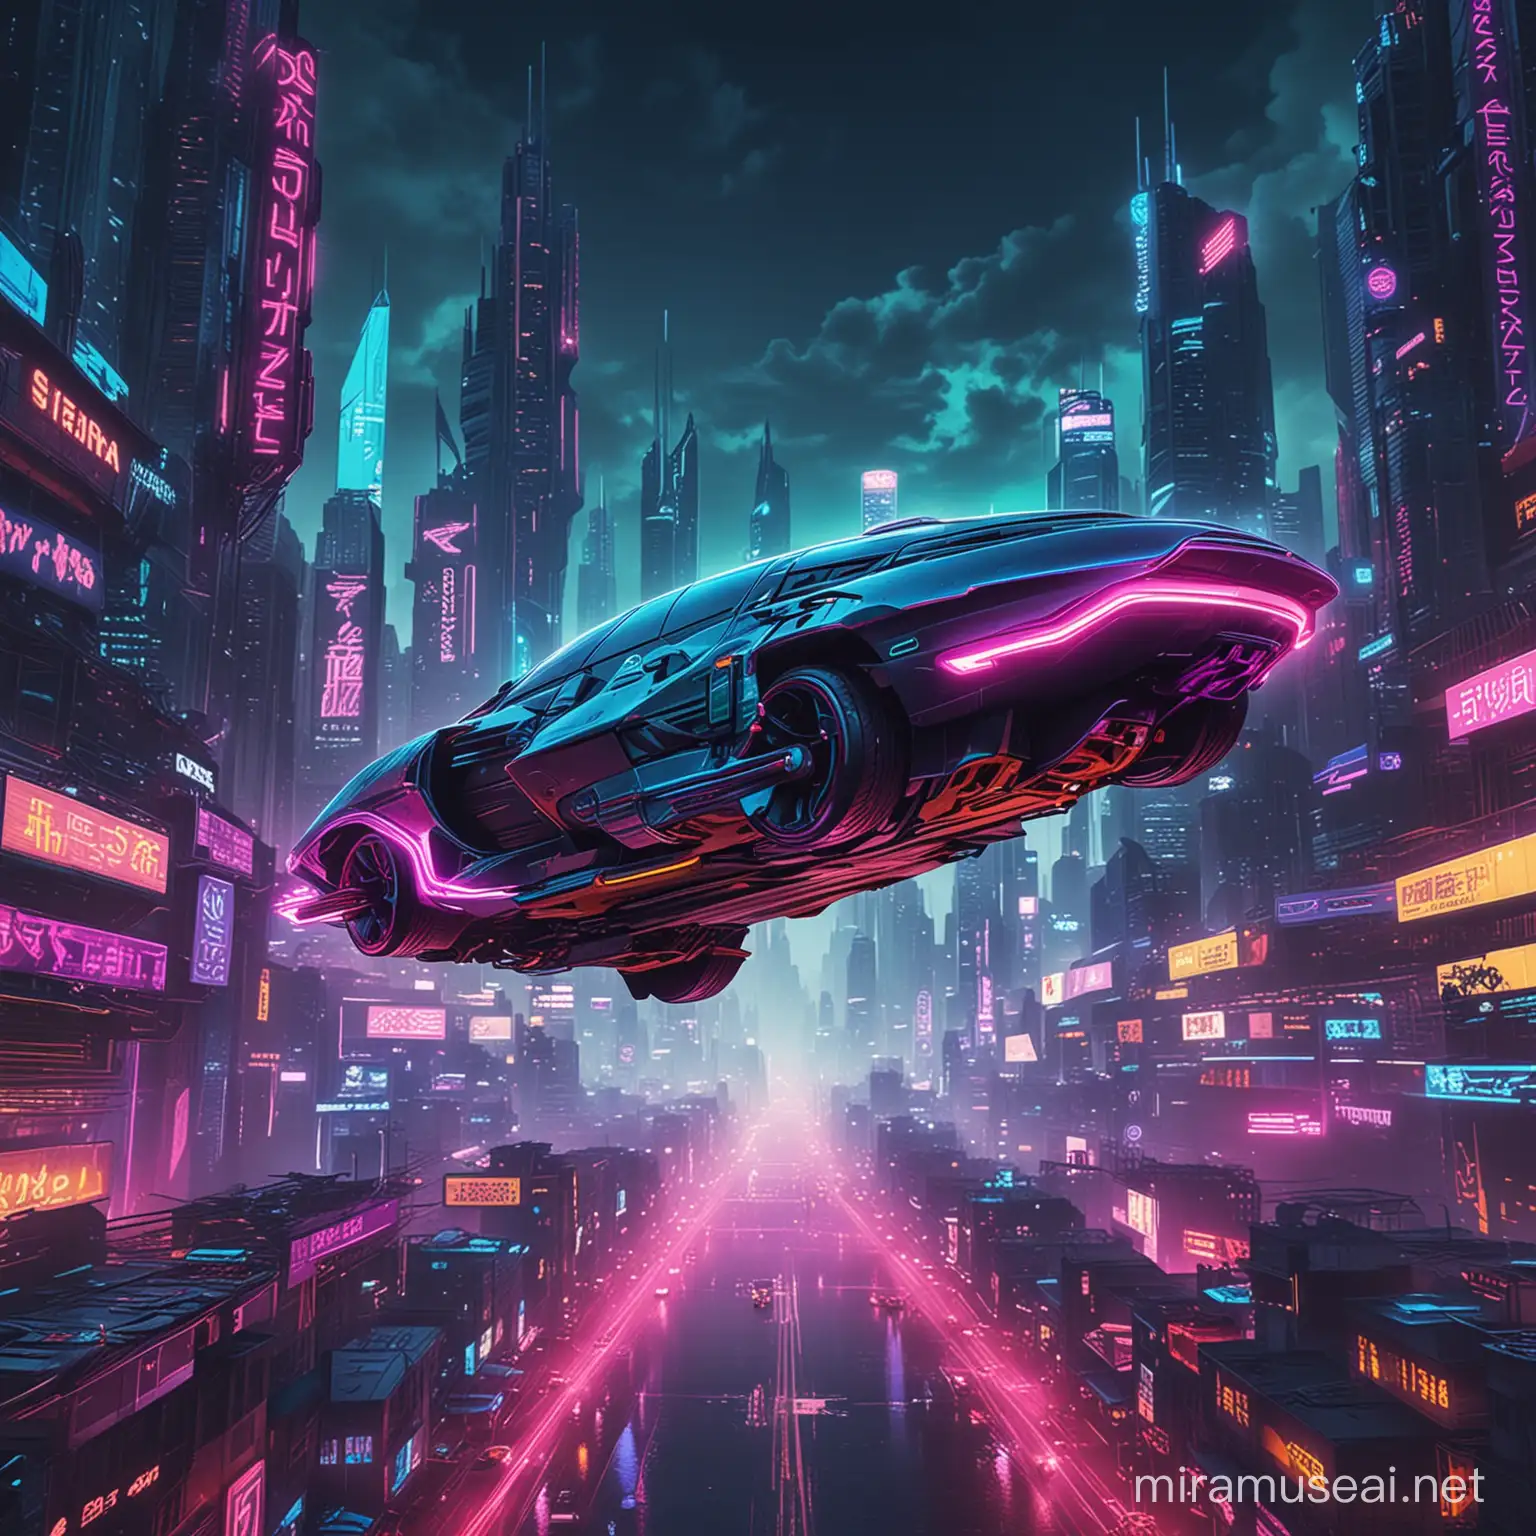 futuristic car soaring over a cyberpunk city in neon colors